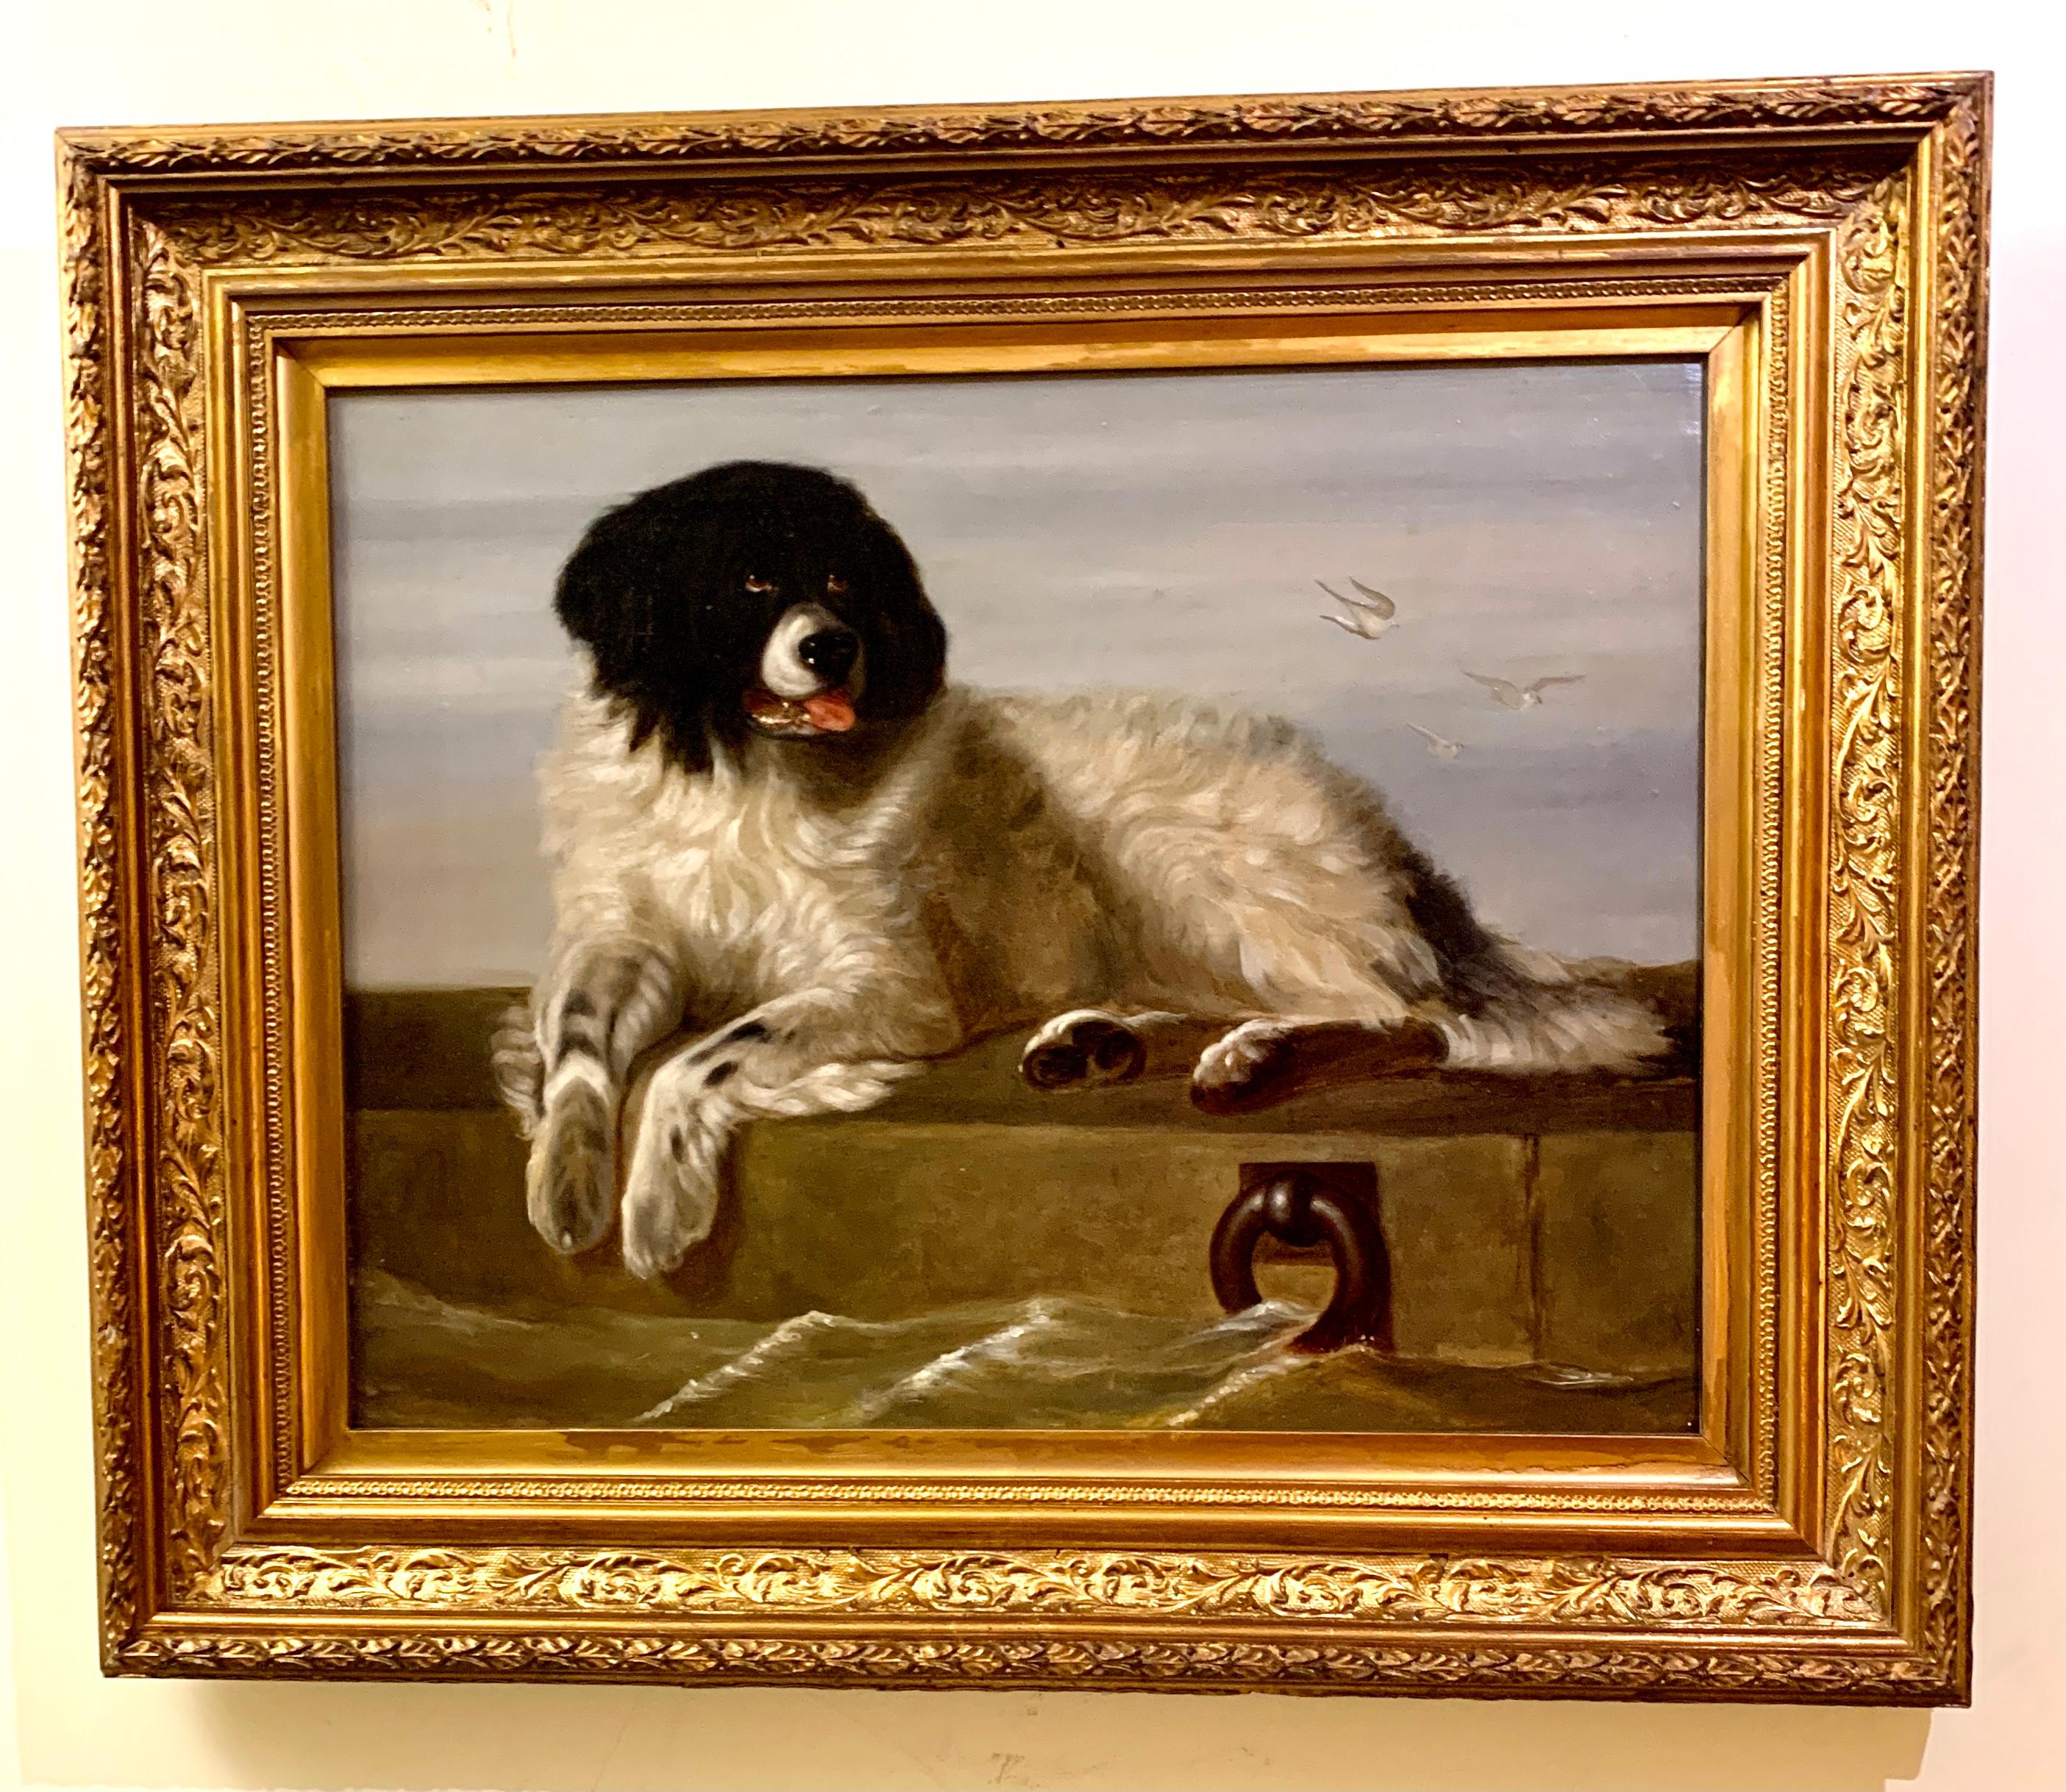 English 19th century, Portrait of a Newfoundland dog, seated